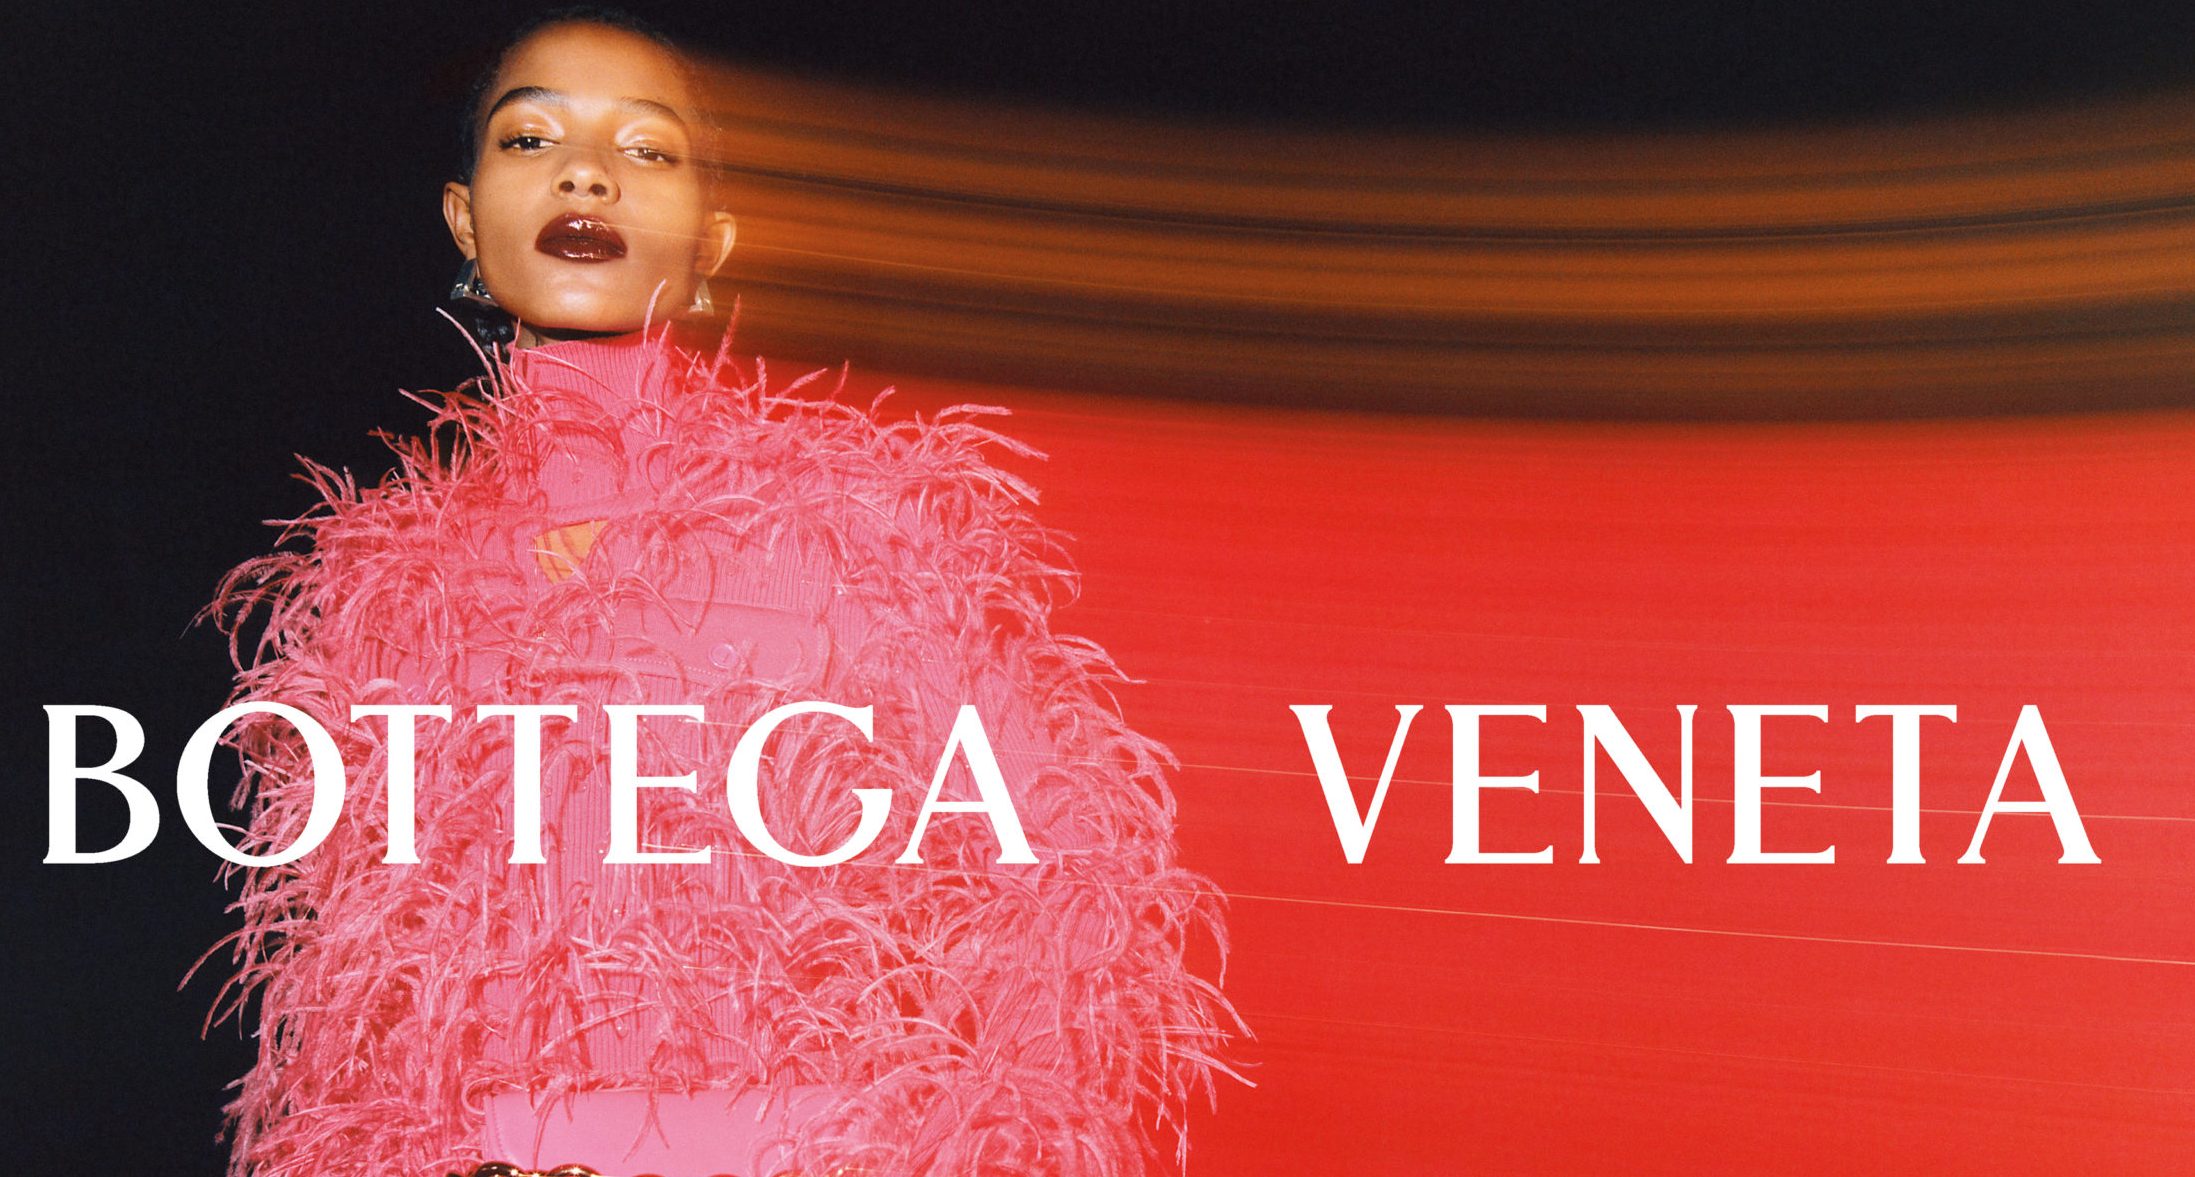 Matthieu Blazy Debuts First Bottega Veneta Campaign